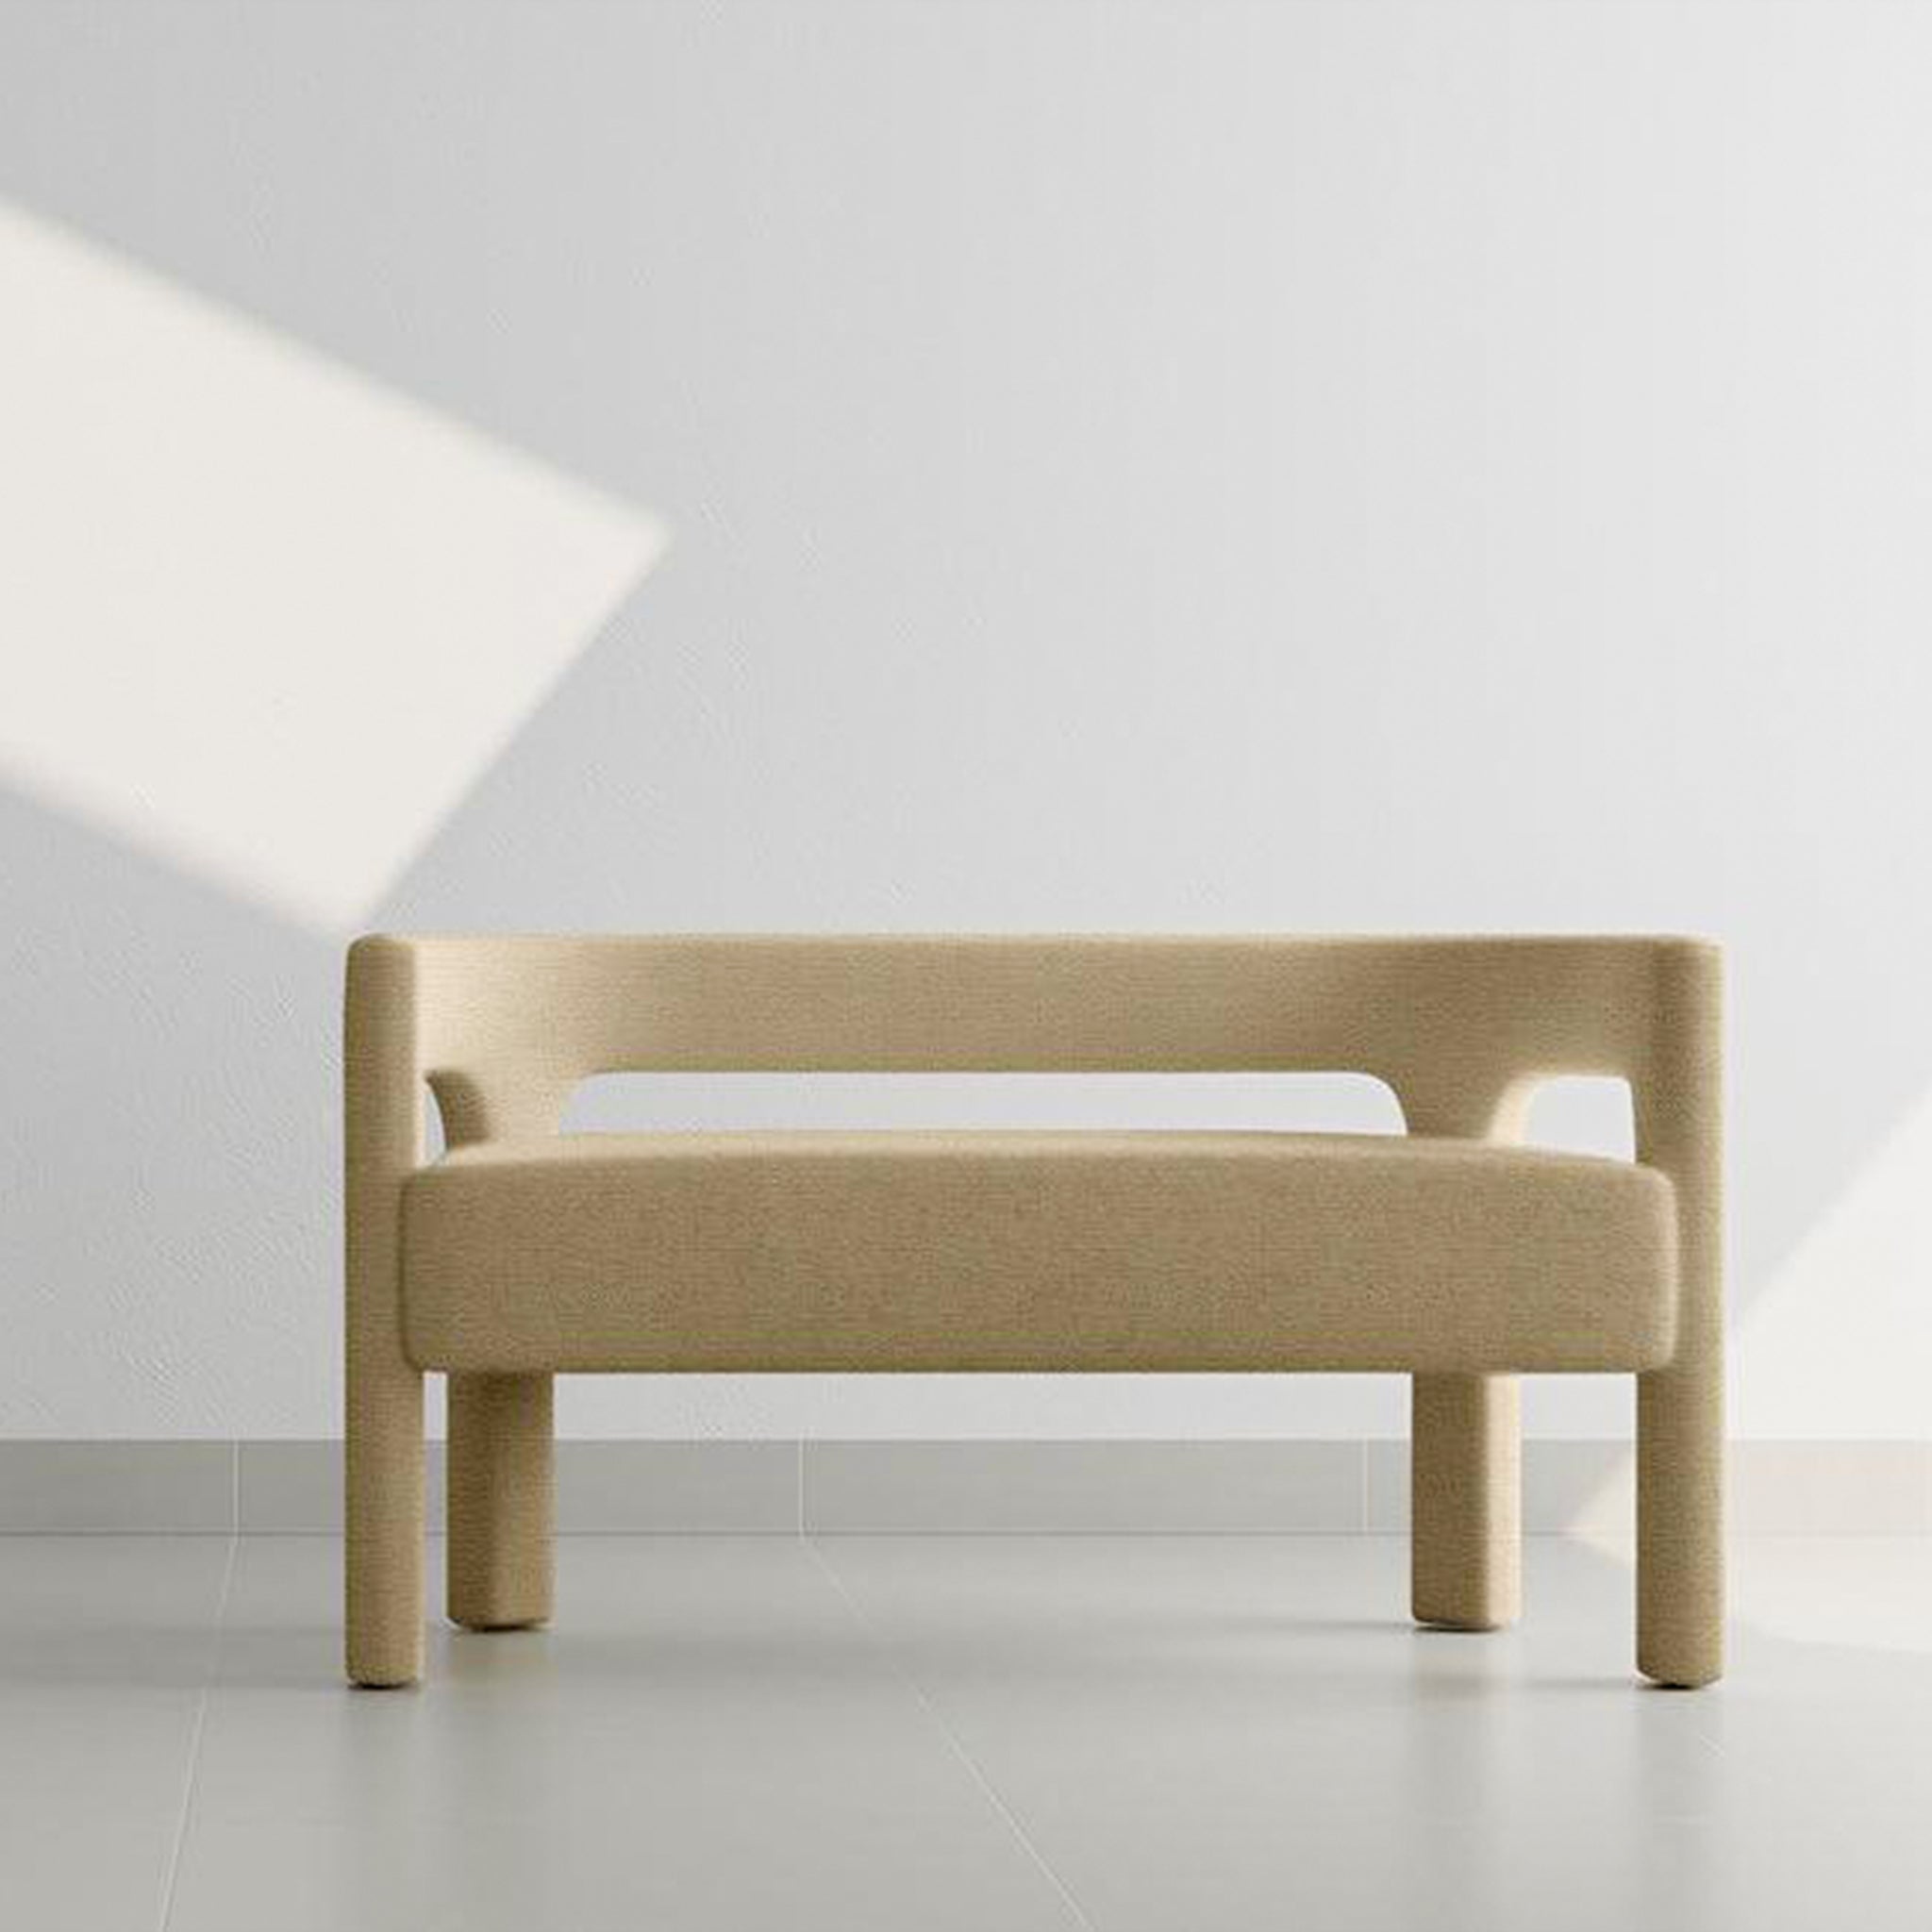 Modern beige two-seater sofa against a minimalist white wall